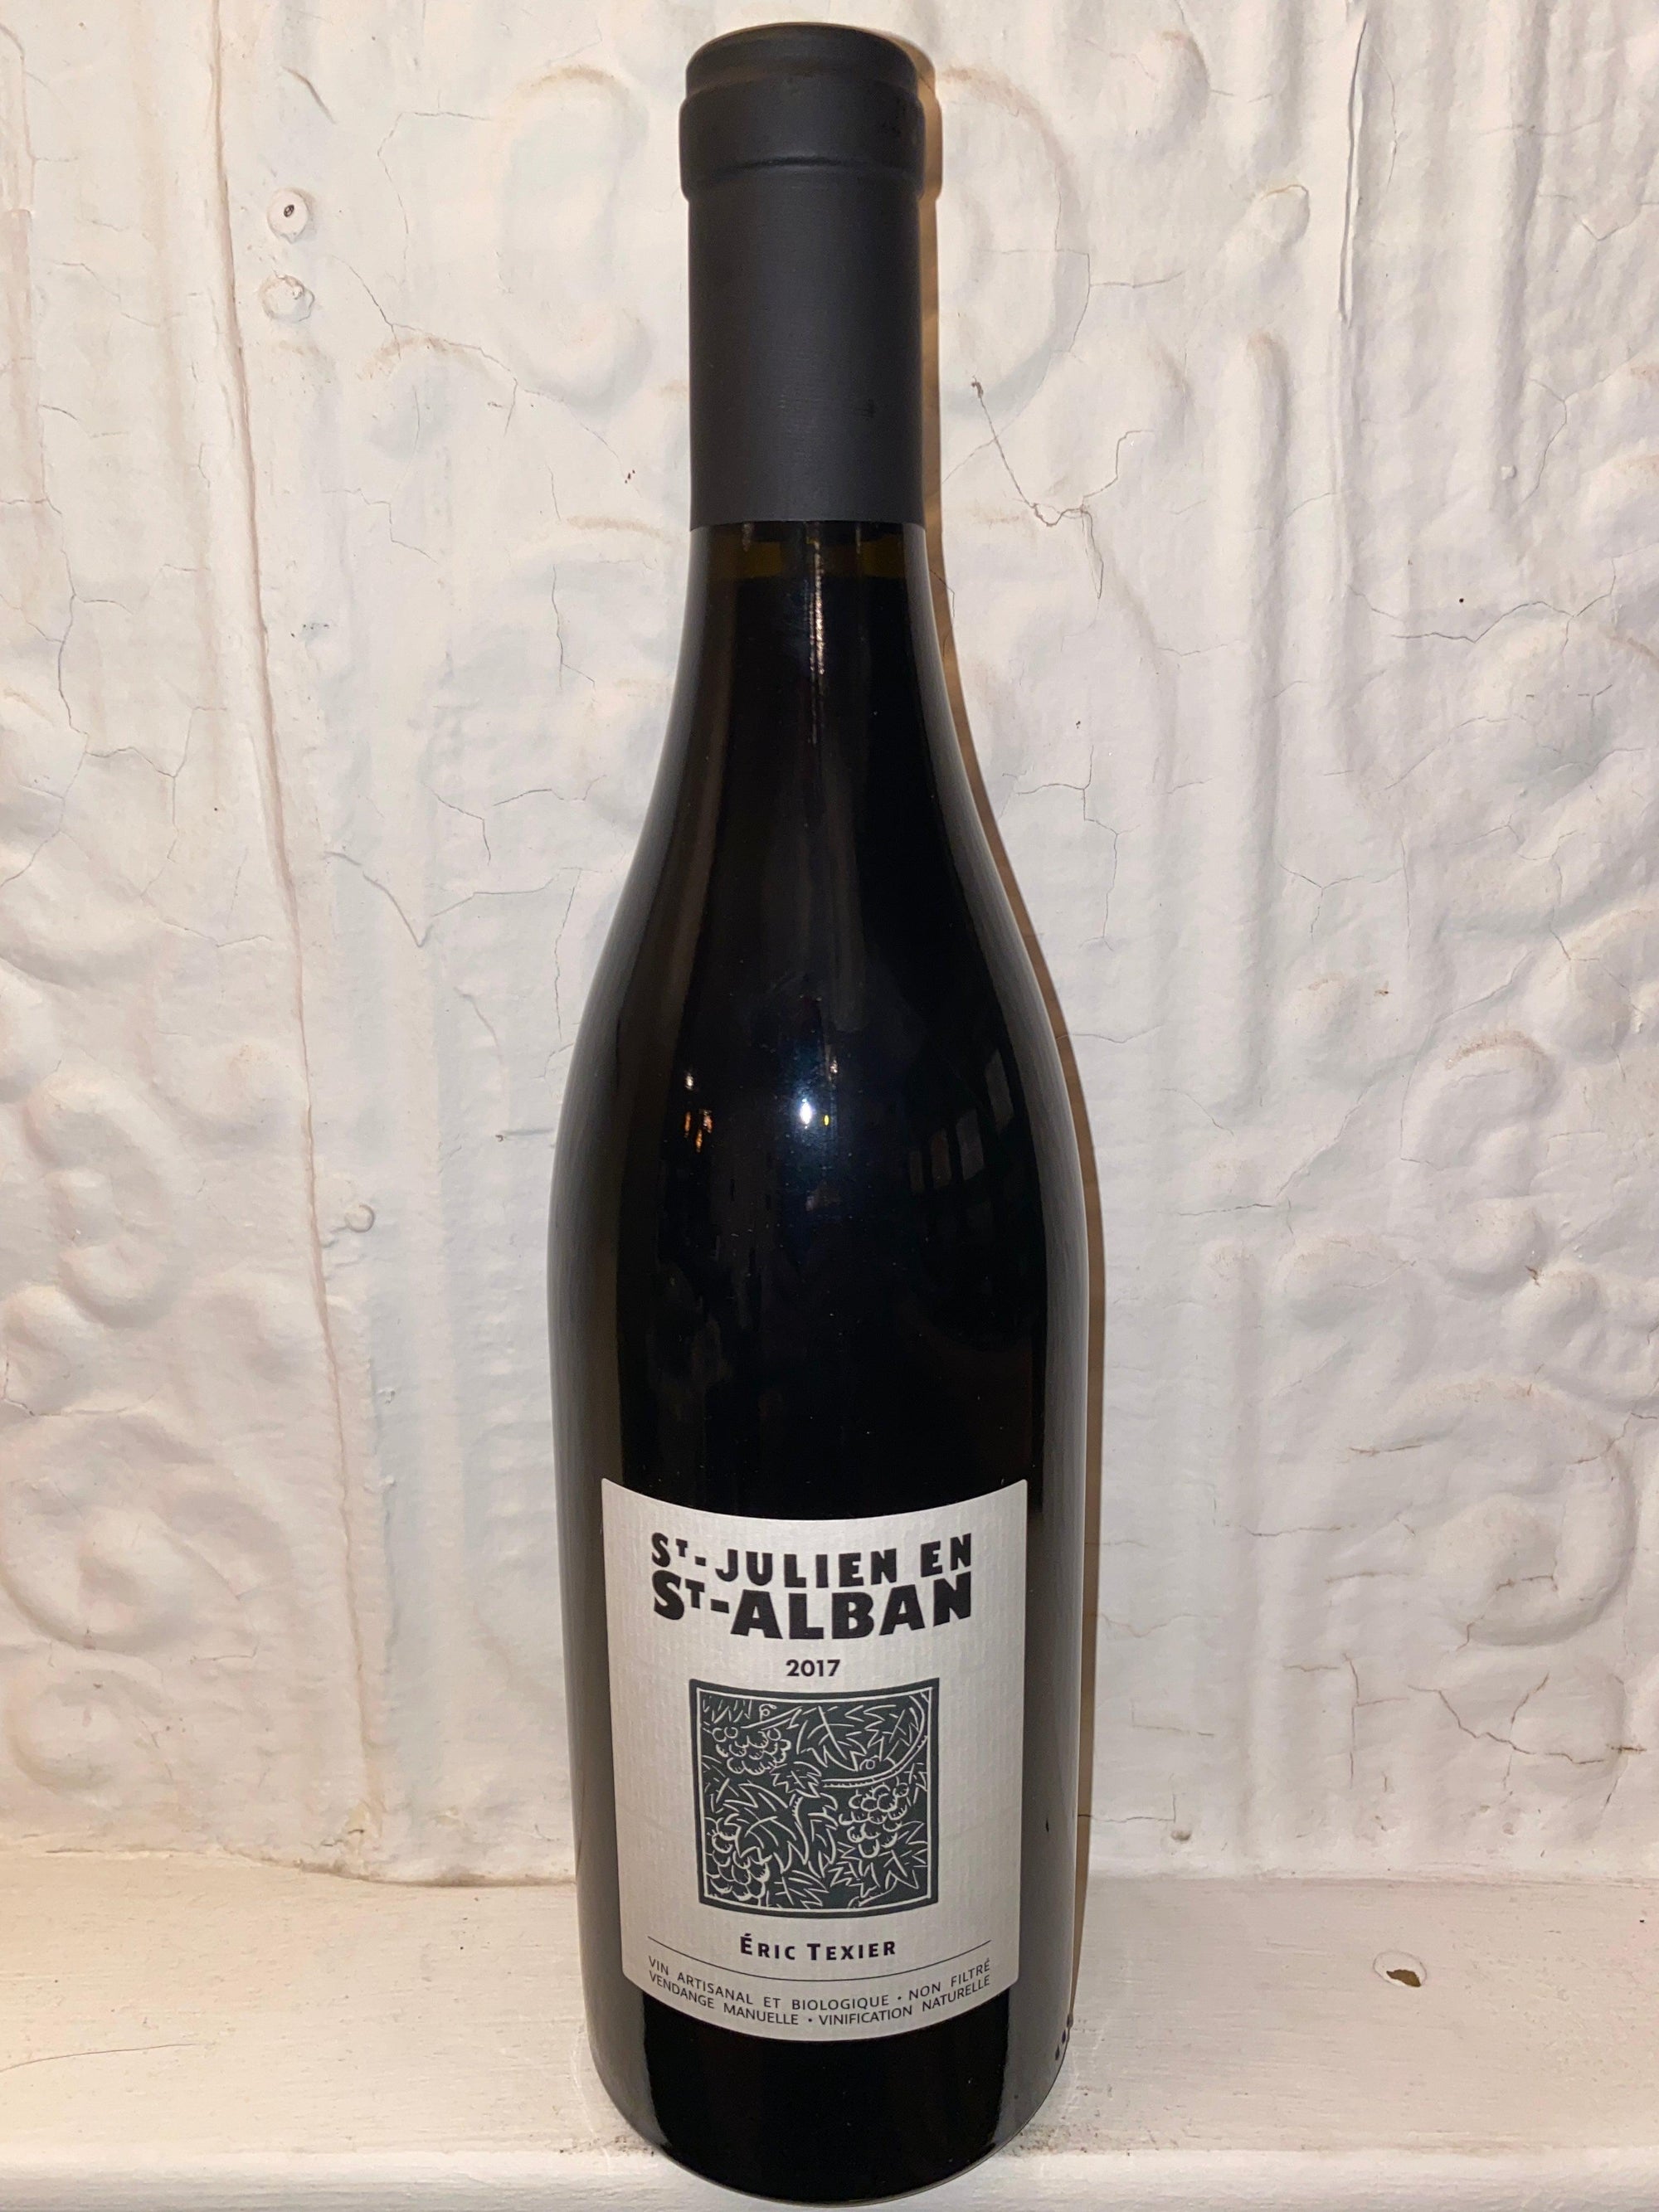 St Julien en St Alban Rouge, Eric Texier 2017 (Rhone, France)-Wine-Bibber & Bell